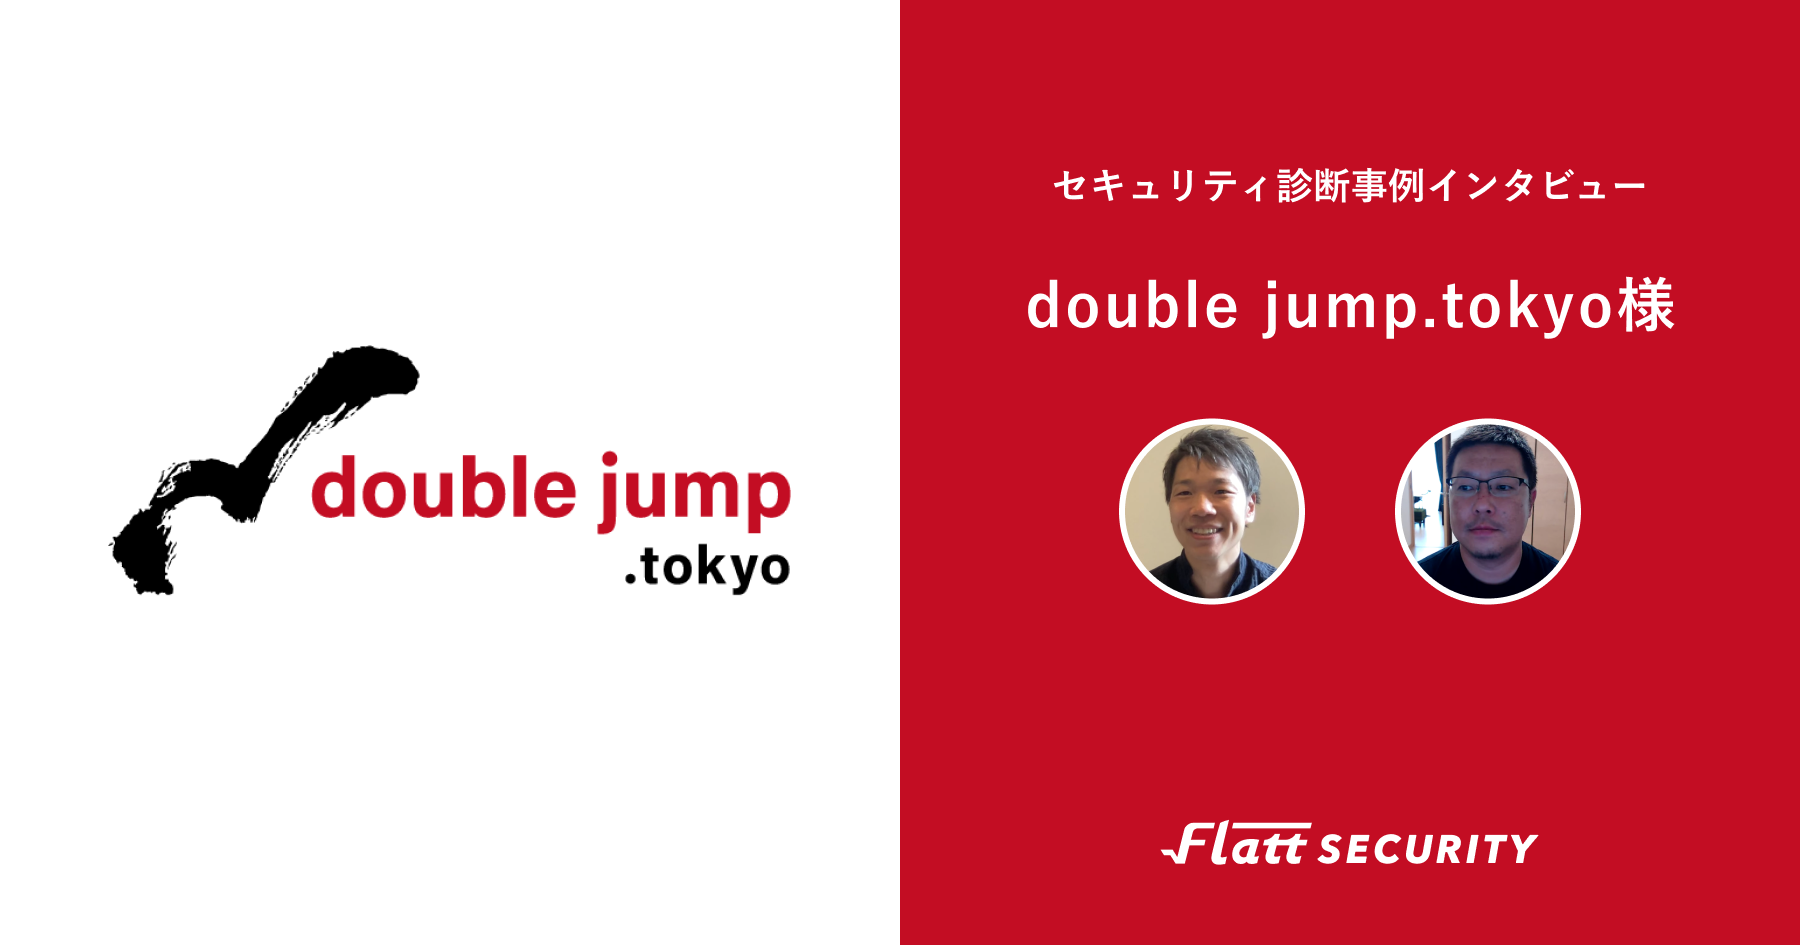 double jump.tokyoのNFT管理サービスのセキュリティ診断。他社では 